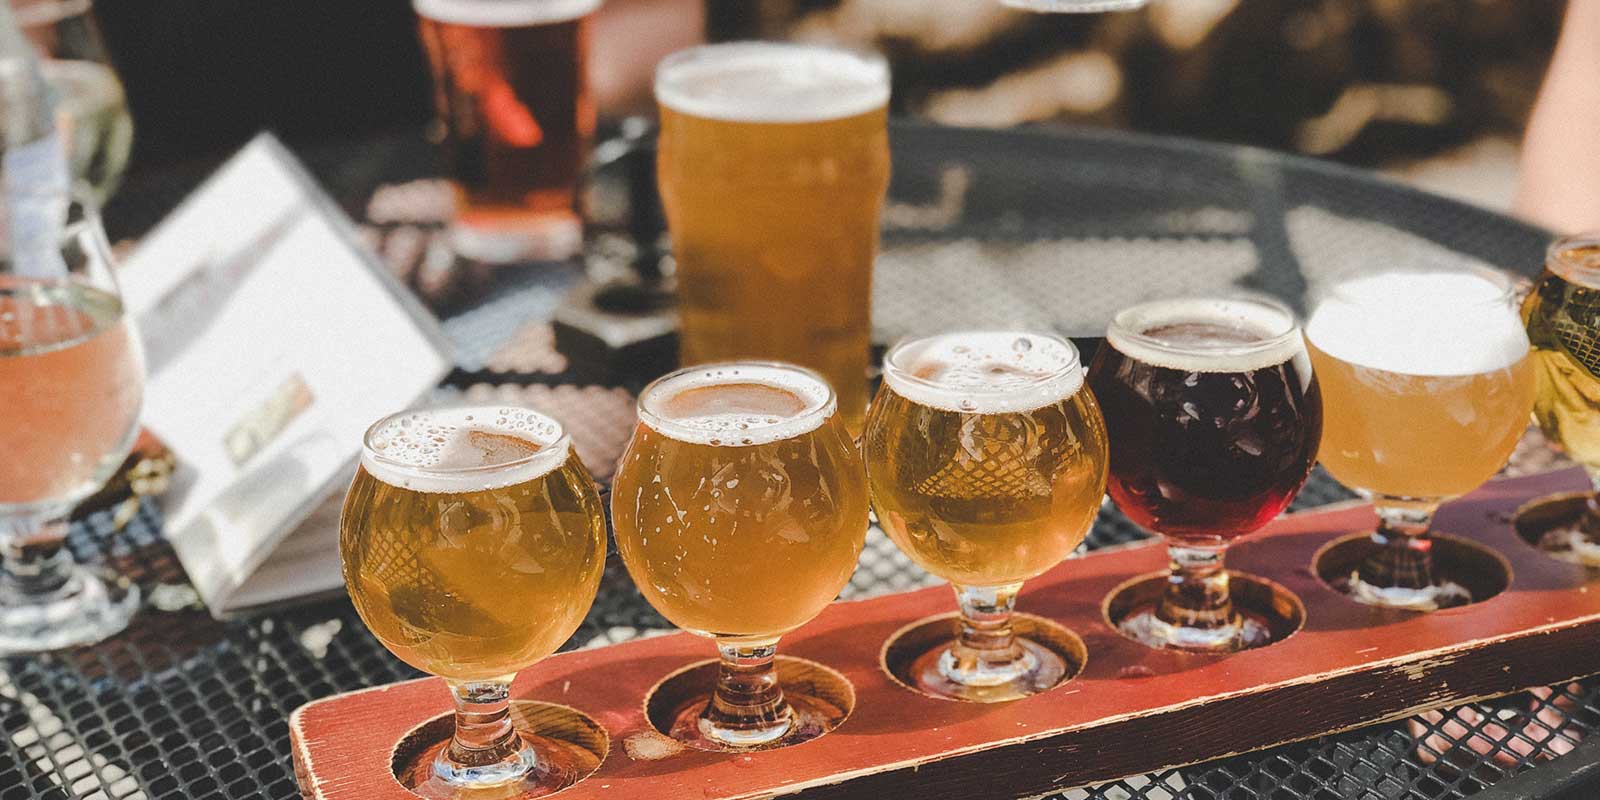 Flight of craft beers in pilsner glasses